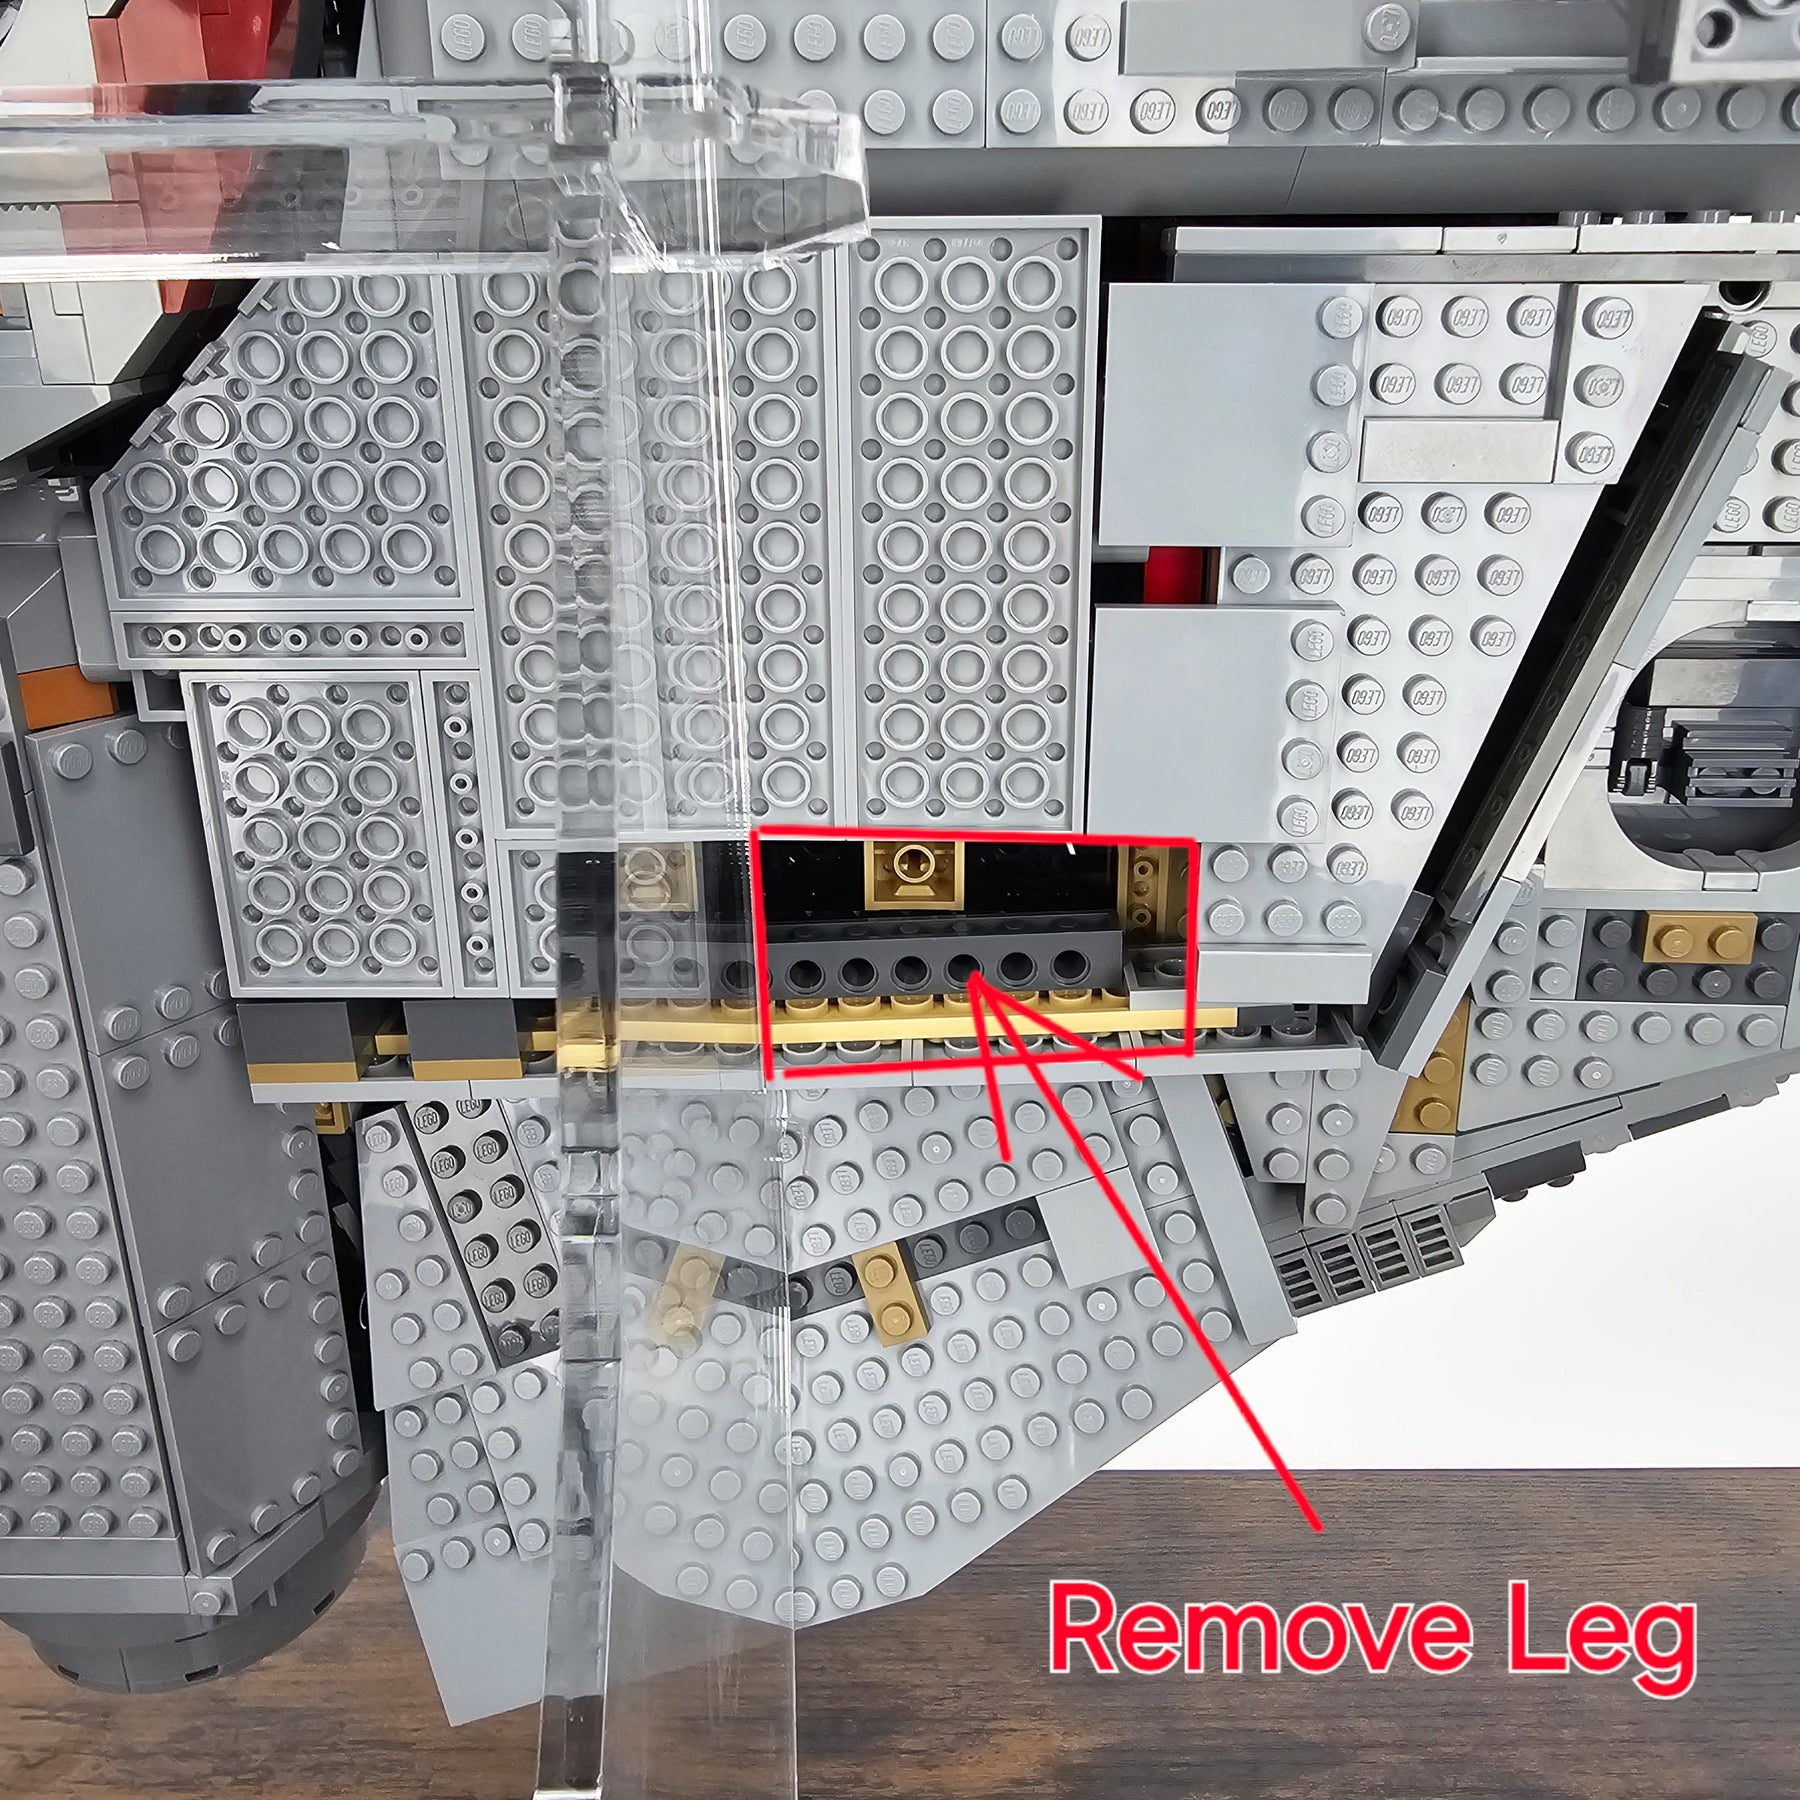 LEGO Star Wars Millennium Falcon 75192 Display Stand